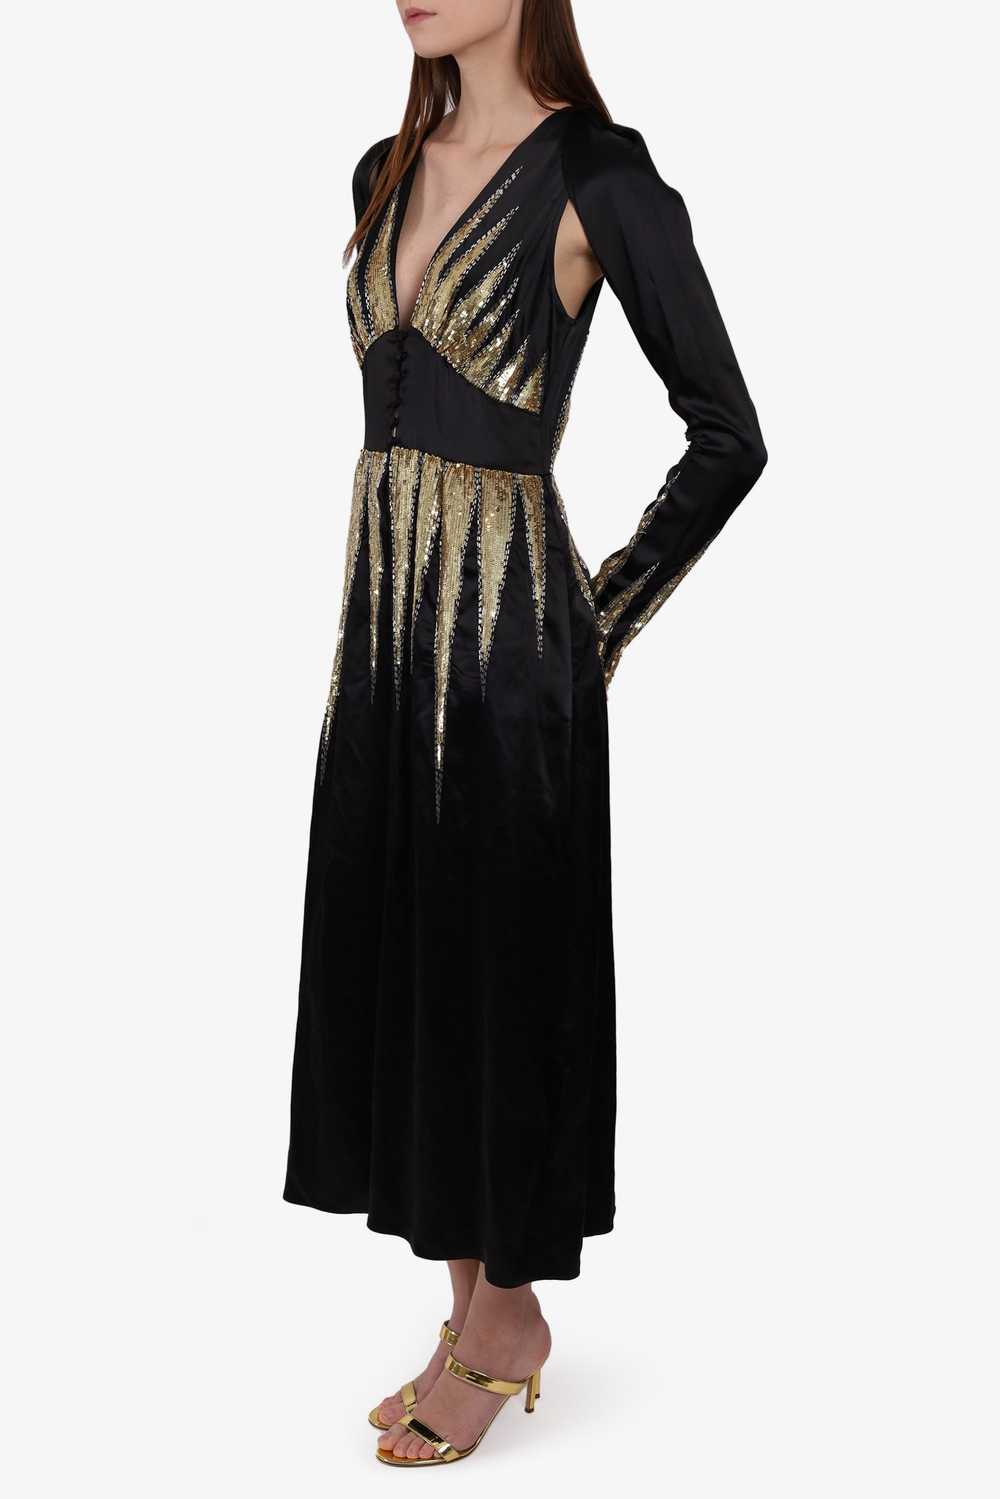 Attico Black Long-sleeve V-Neck Dress with Gold S… - image 4